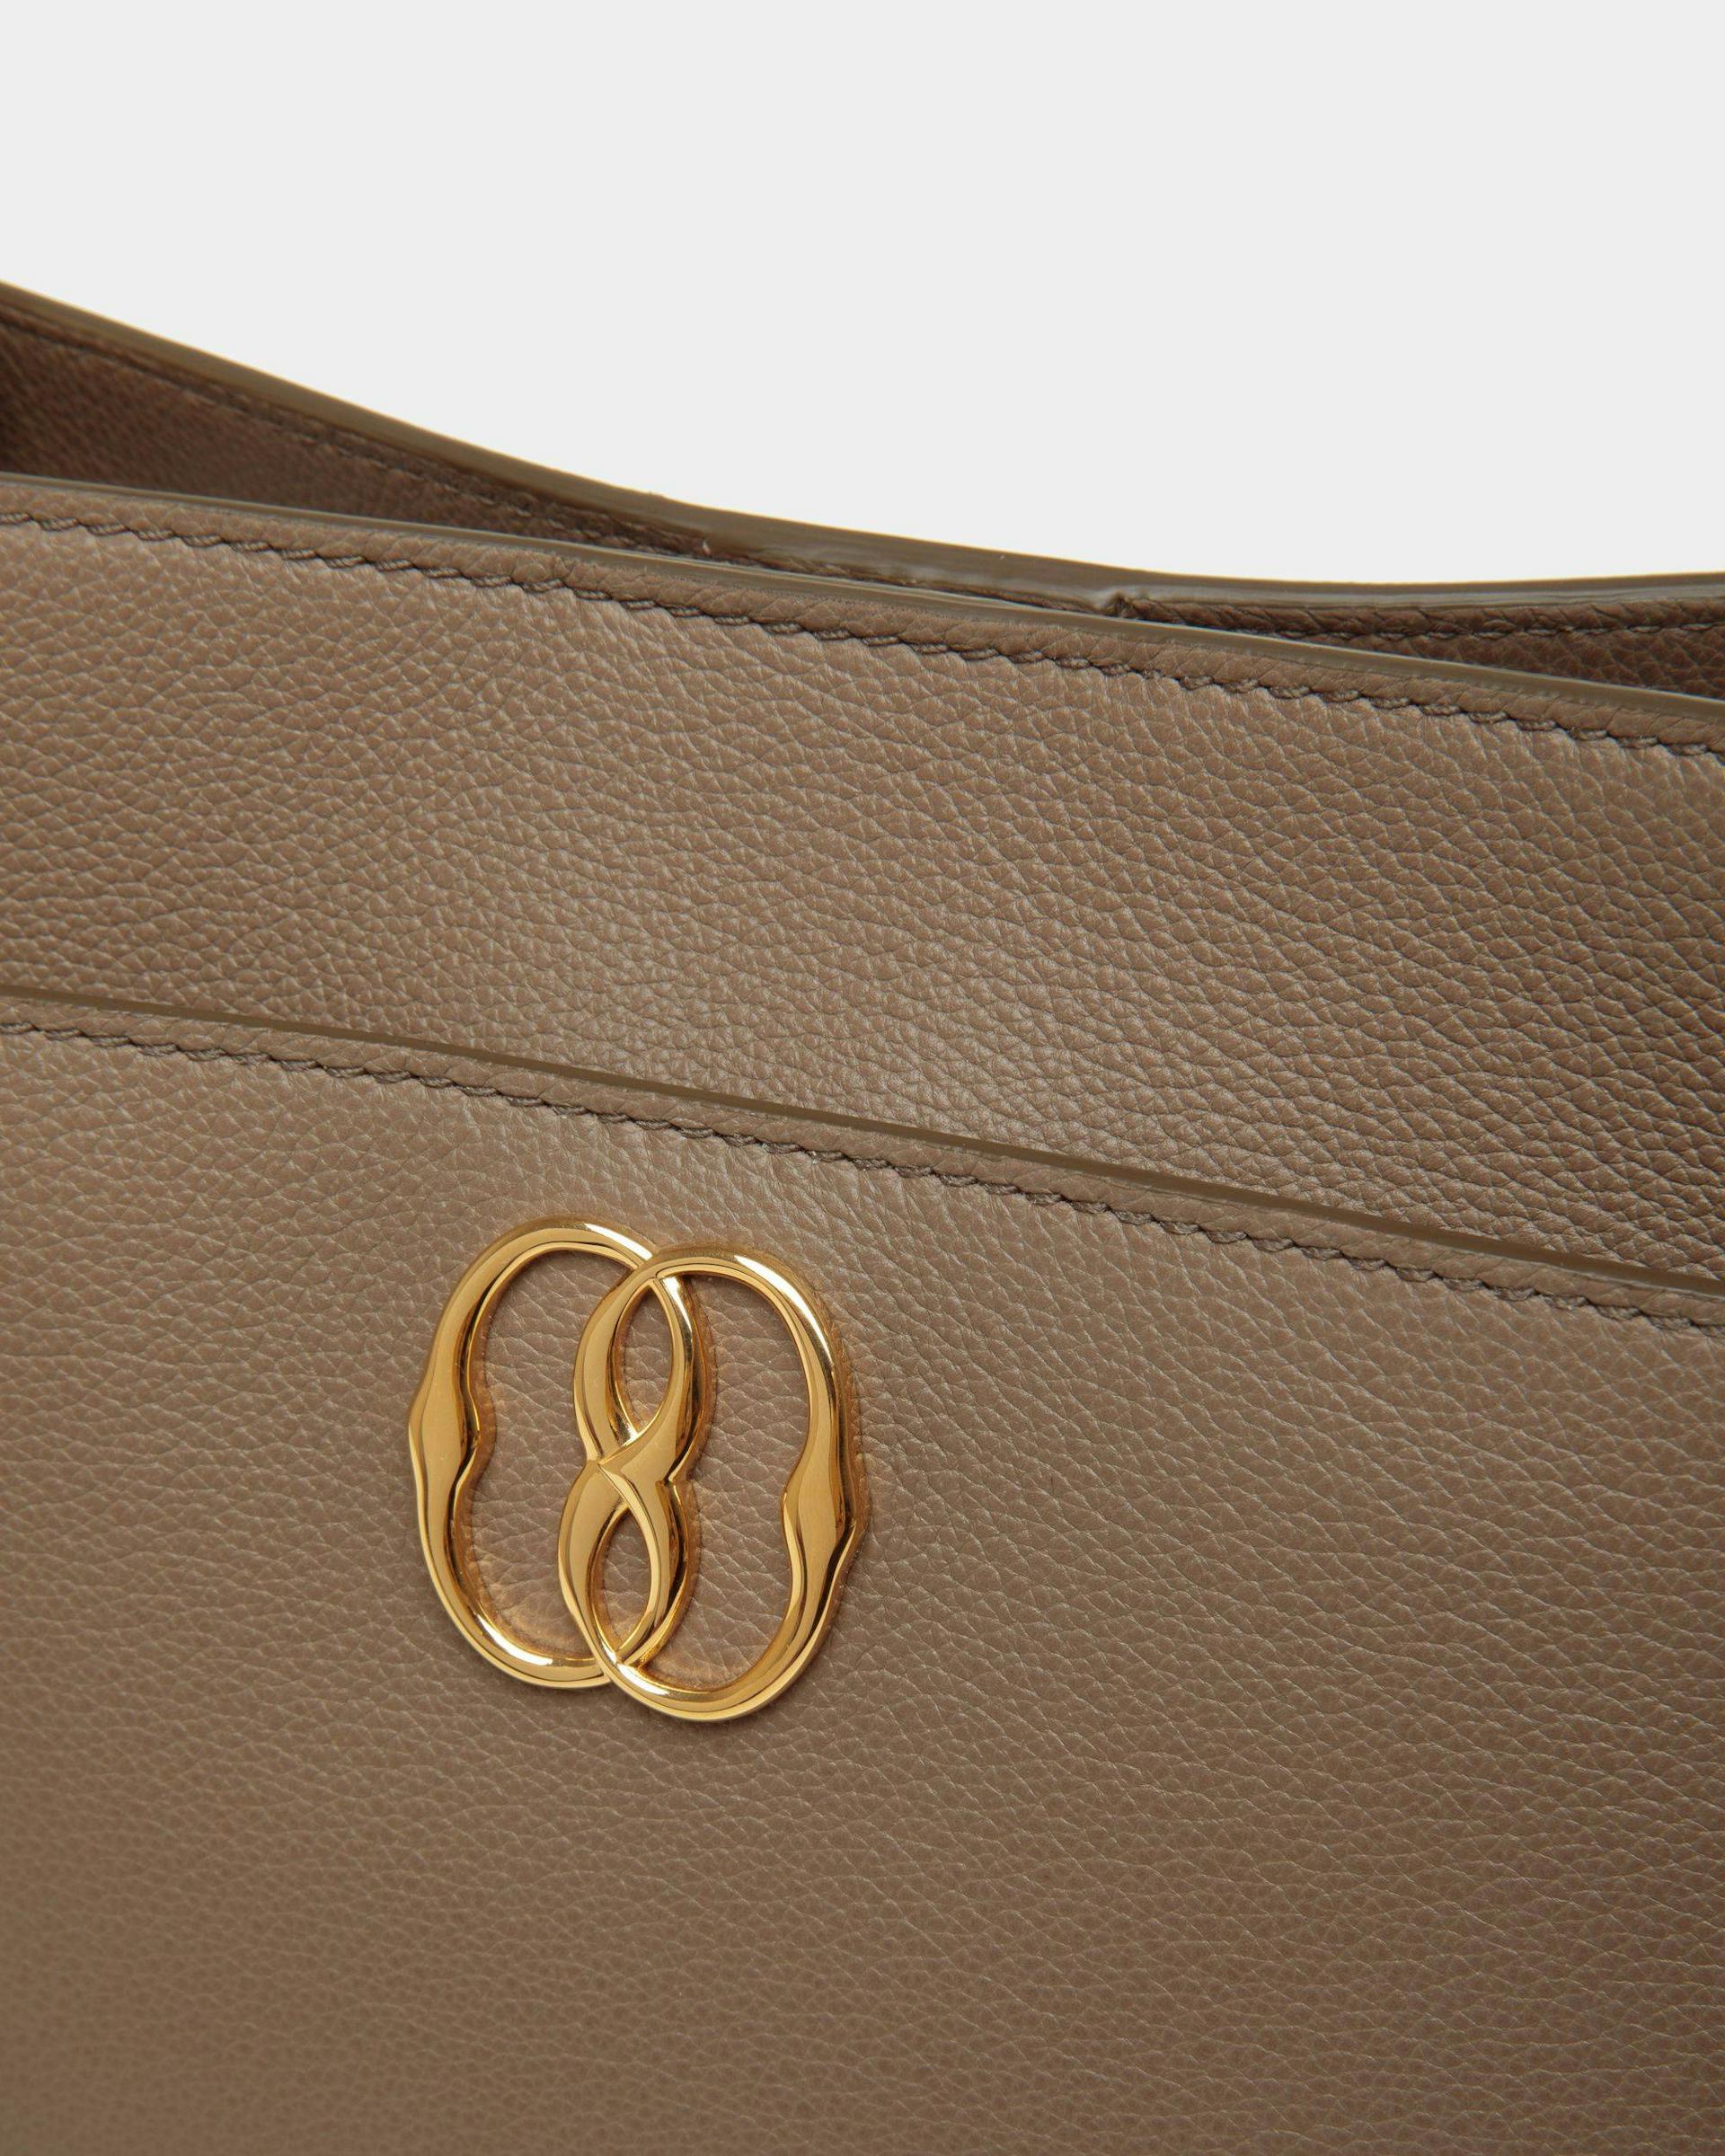 Women's Emblem Shoulder Bag in Beige Grained Leather | Bally | Still Life Detail